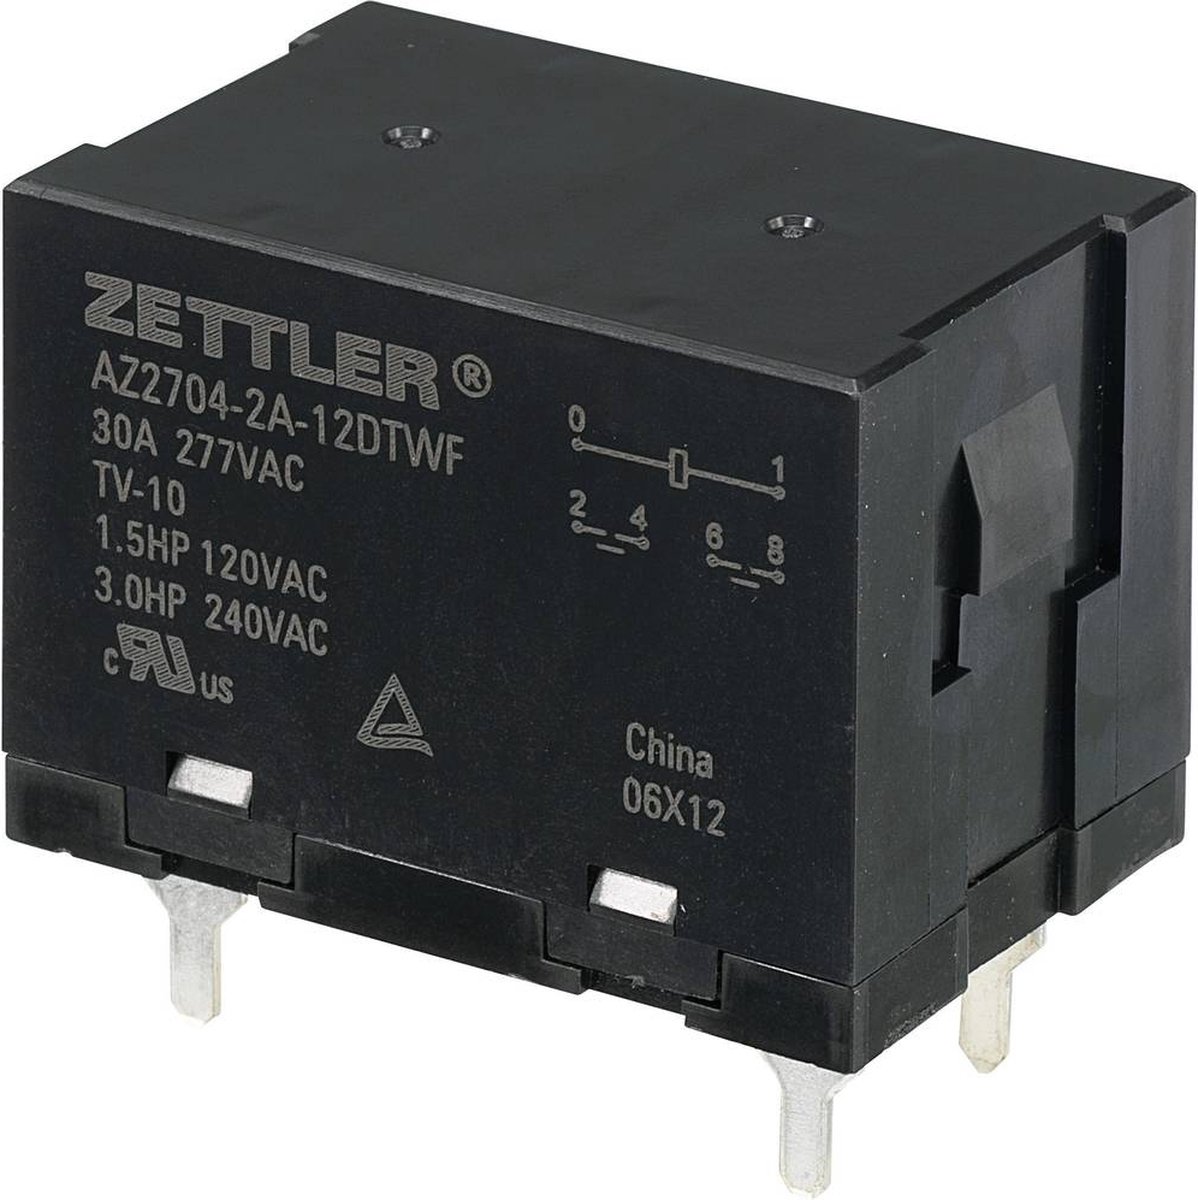 Zettler Electronics AZ2704-2A-12DTWF Printrelais 12 V/DC 30 A 2x NO 1 stuk(s)